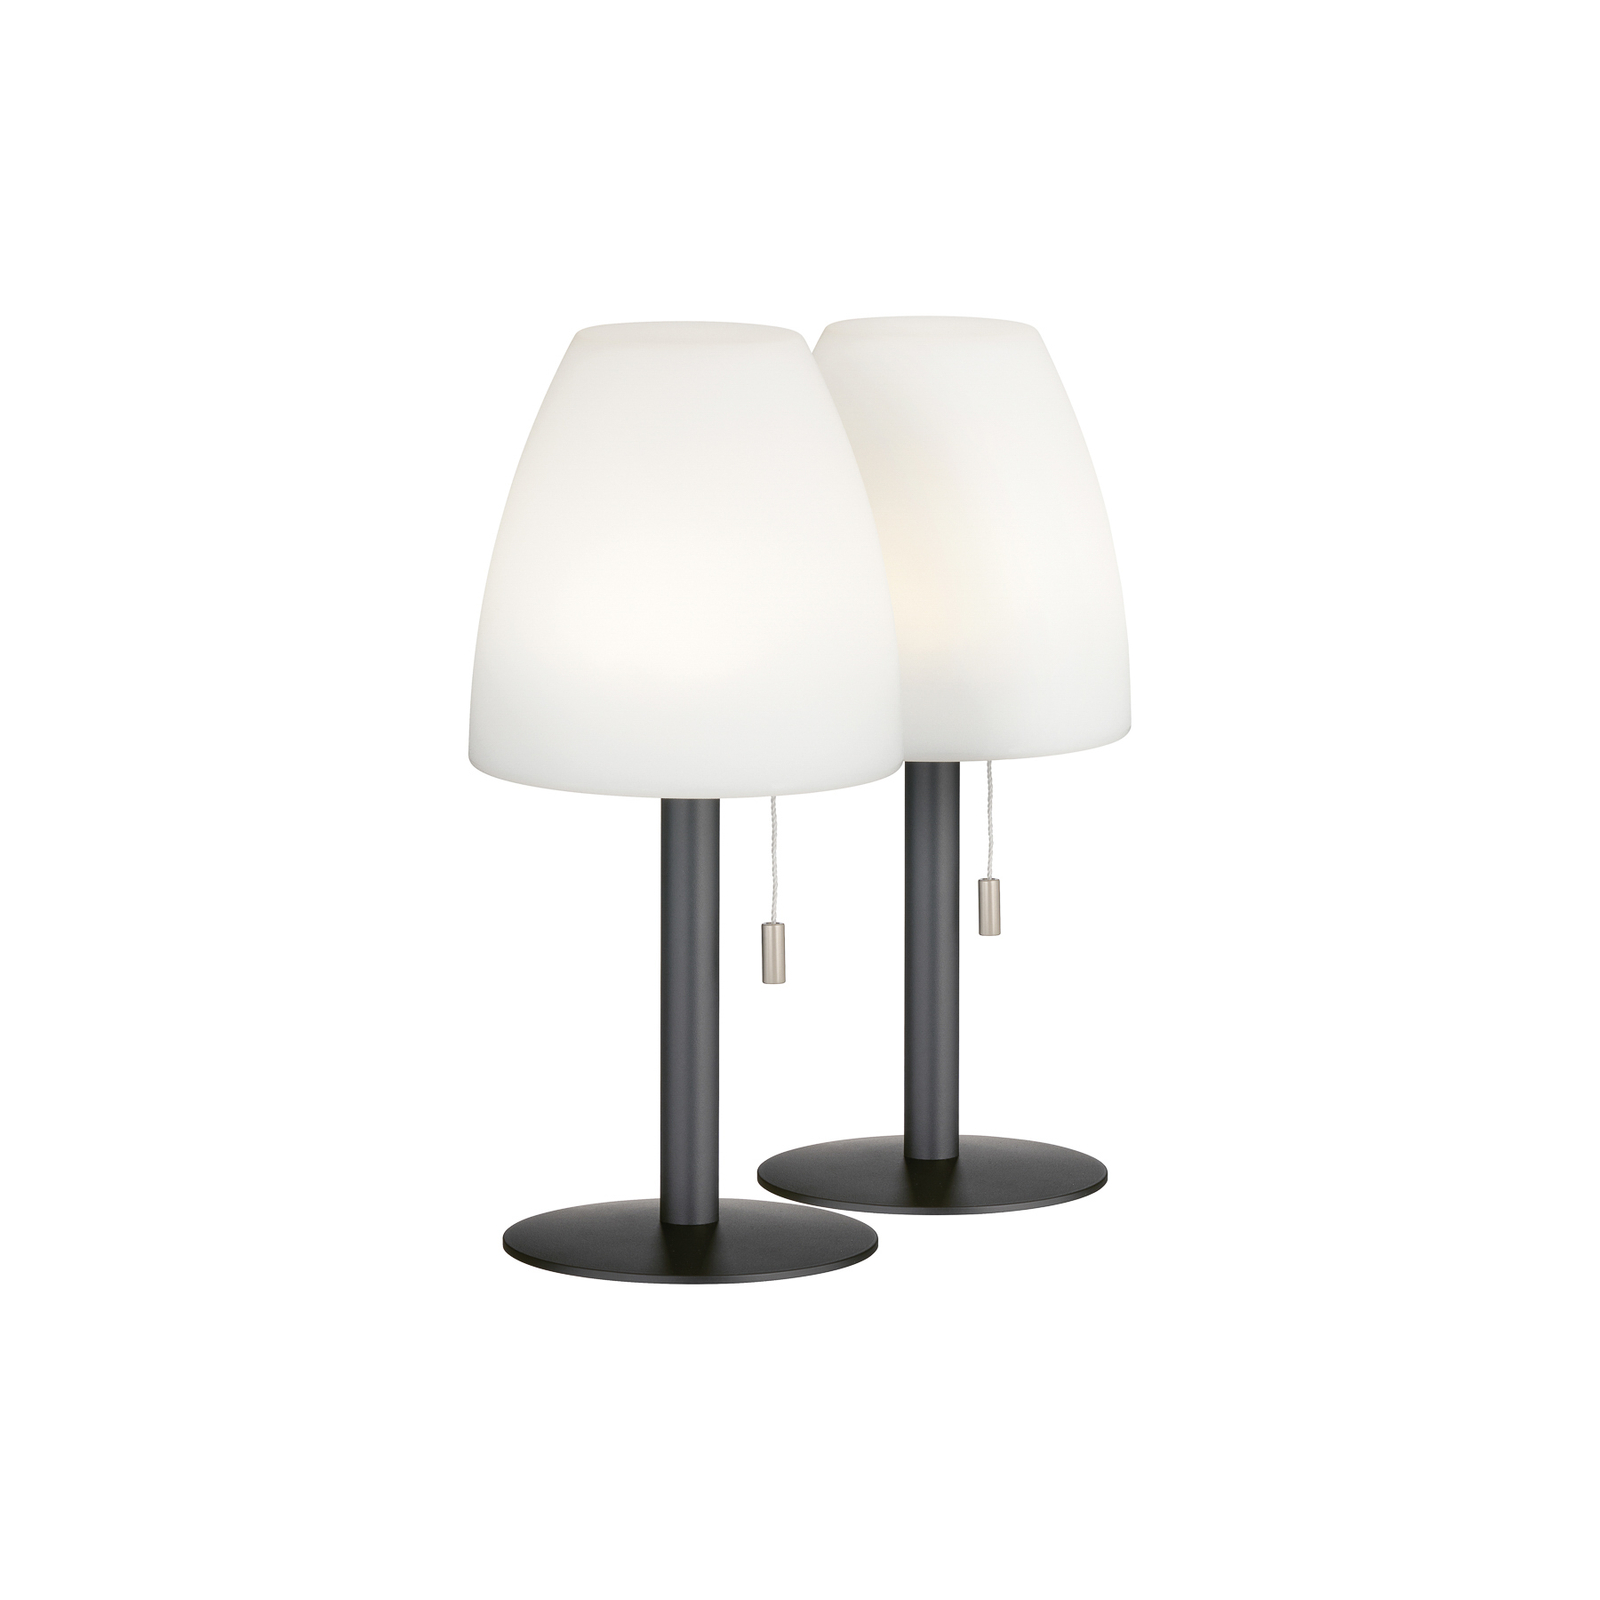 Candeeiro de mesa recarregável LED Fiumara preto/branco conjunto de 2